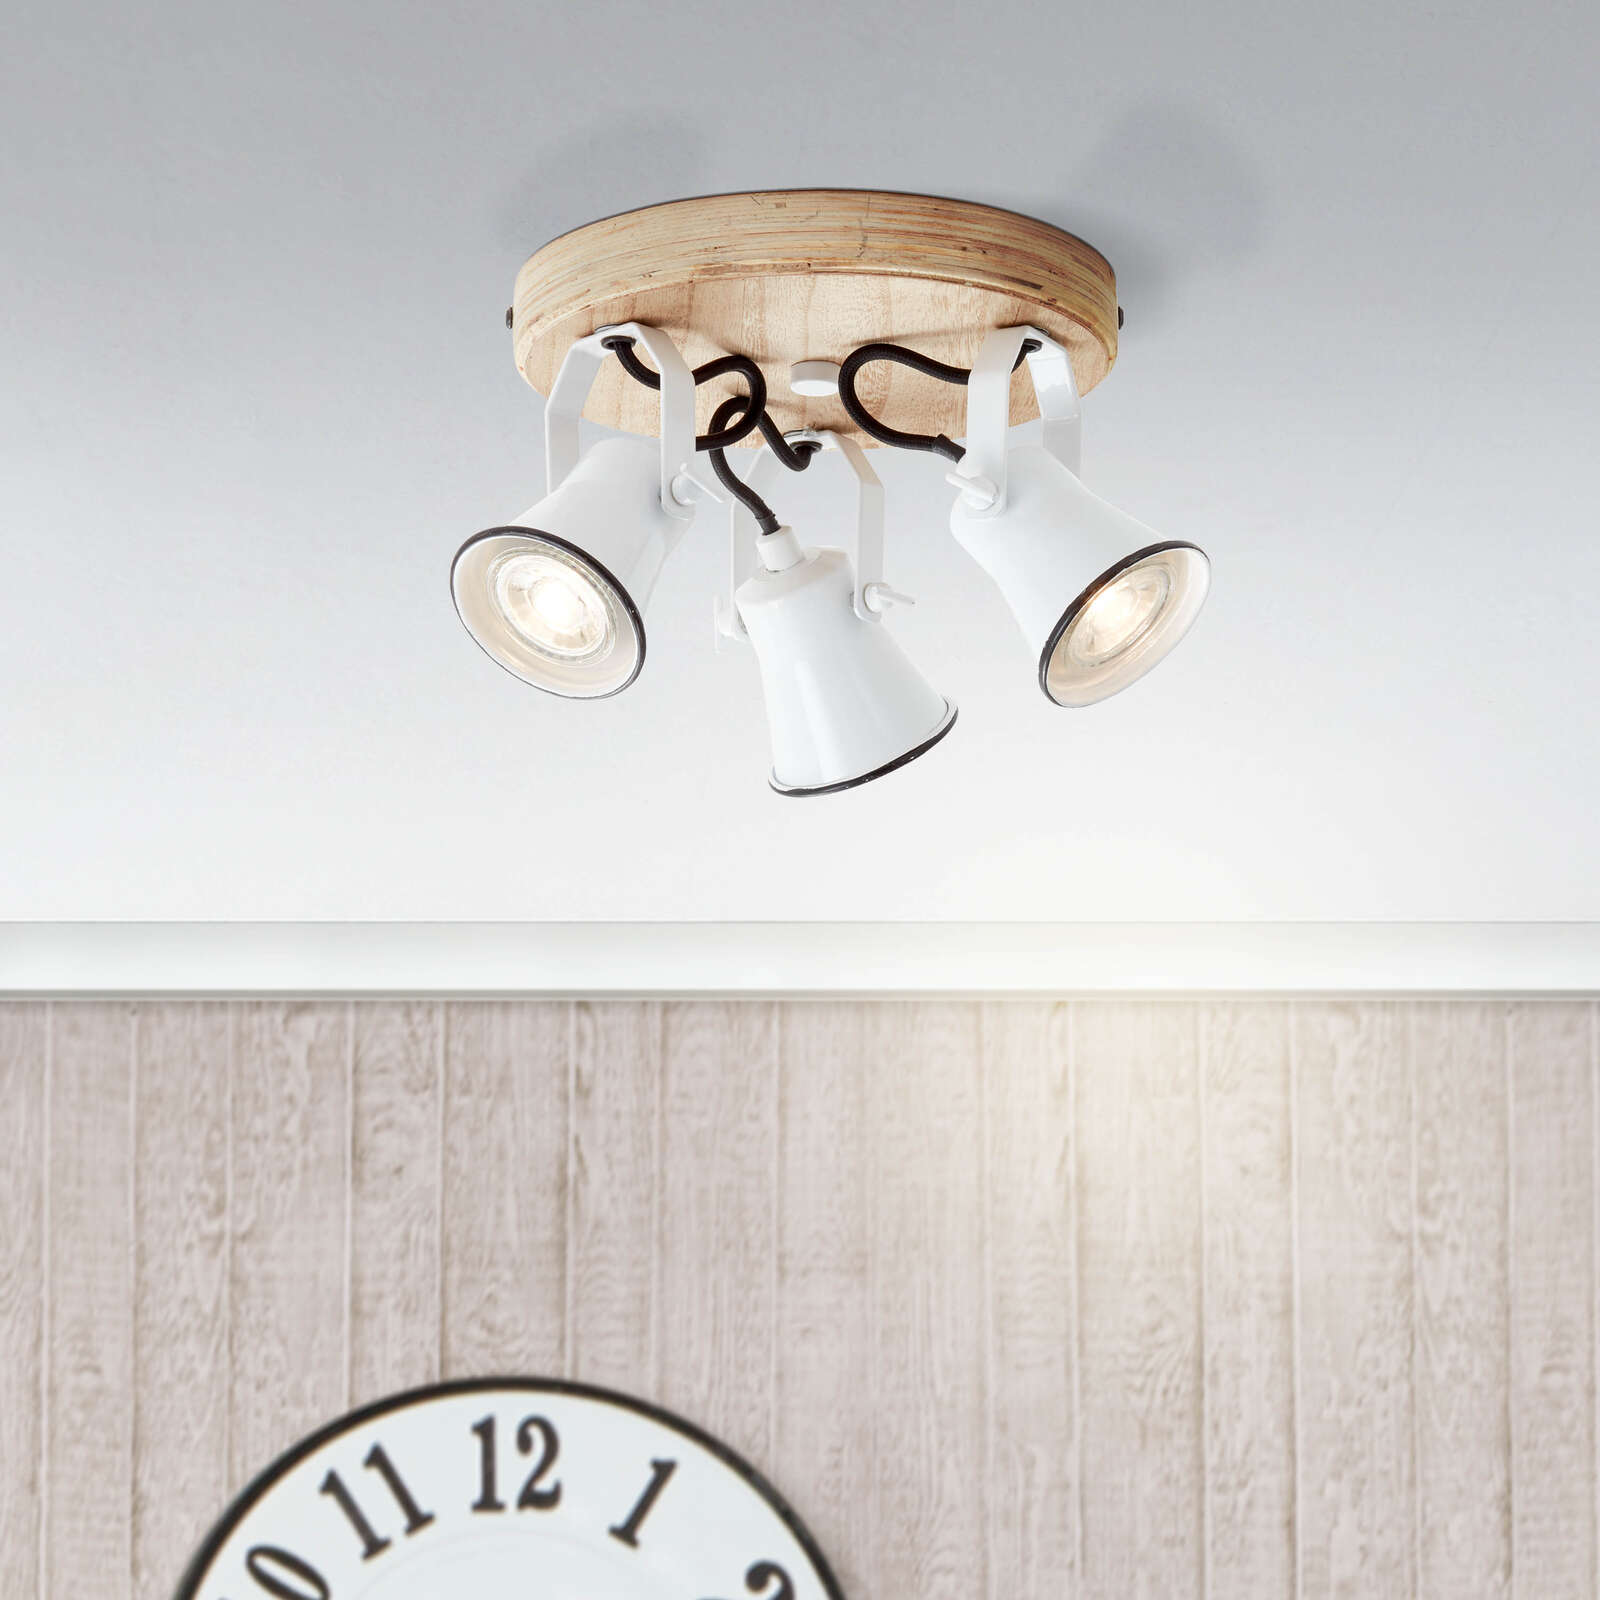             Wooden spotlight shelf - Naomi 3 - Beige
        